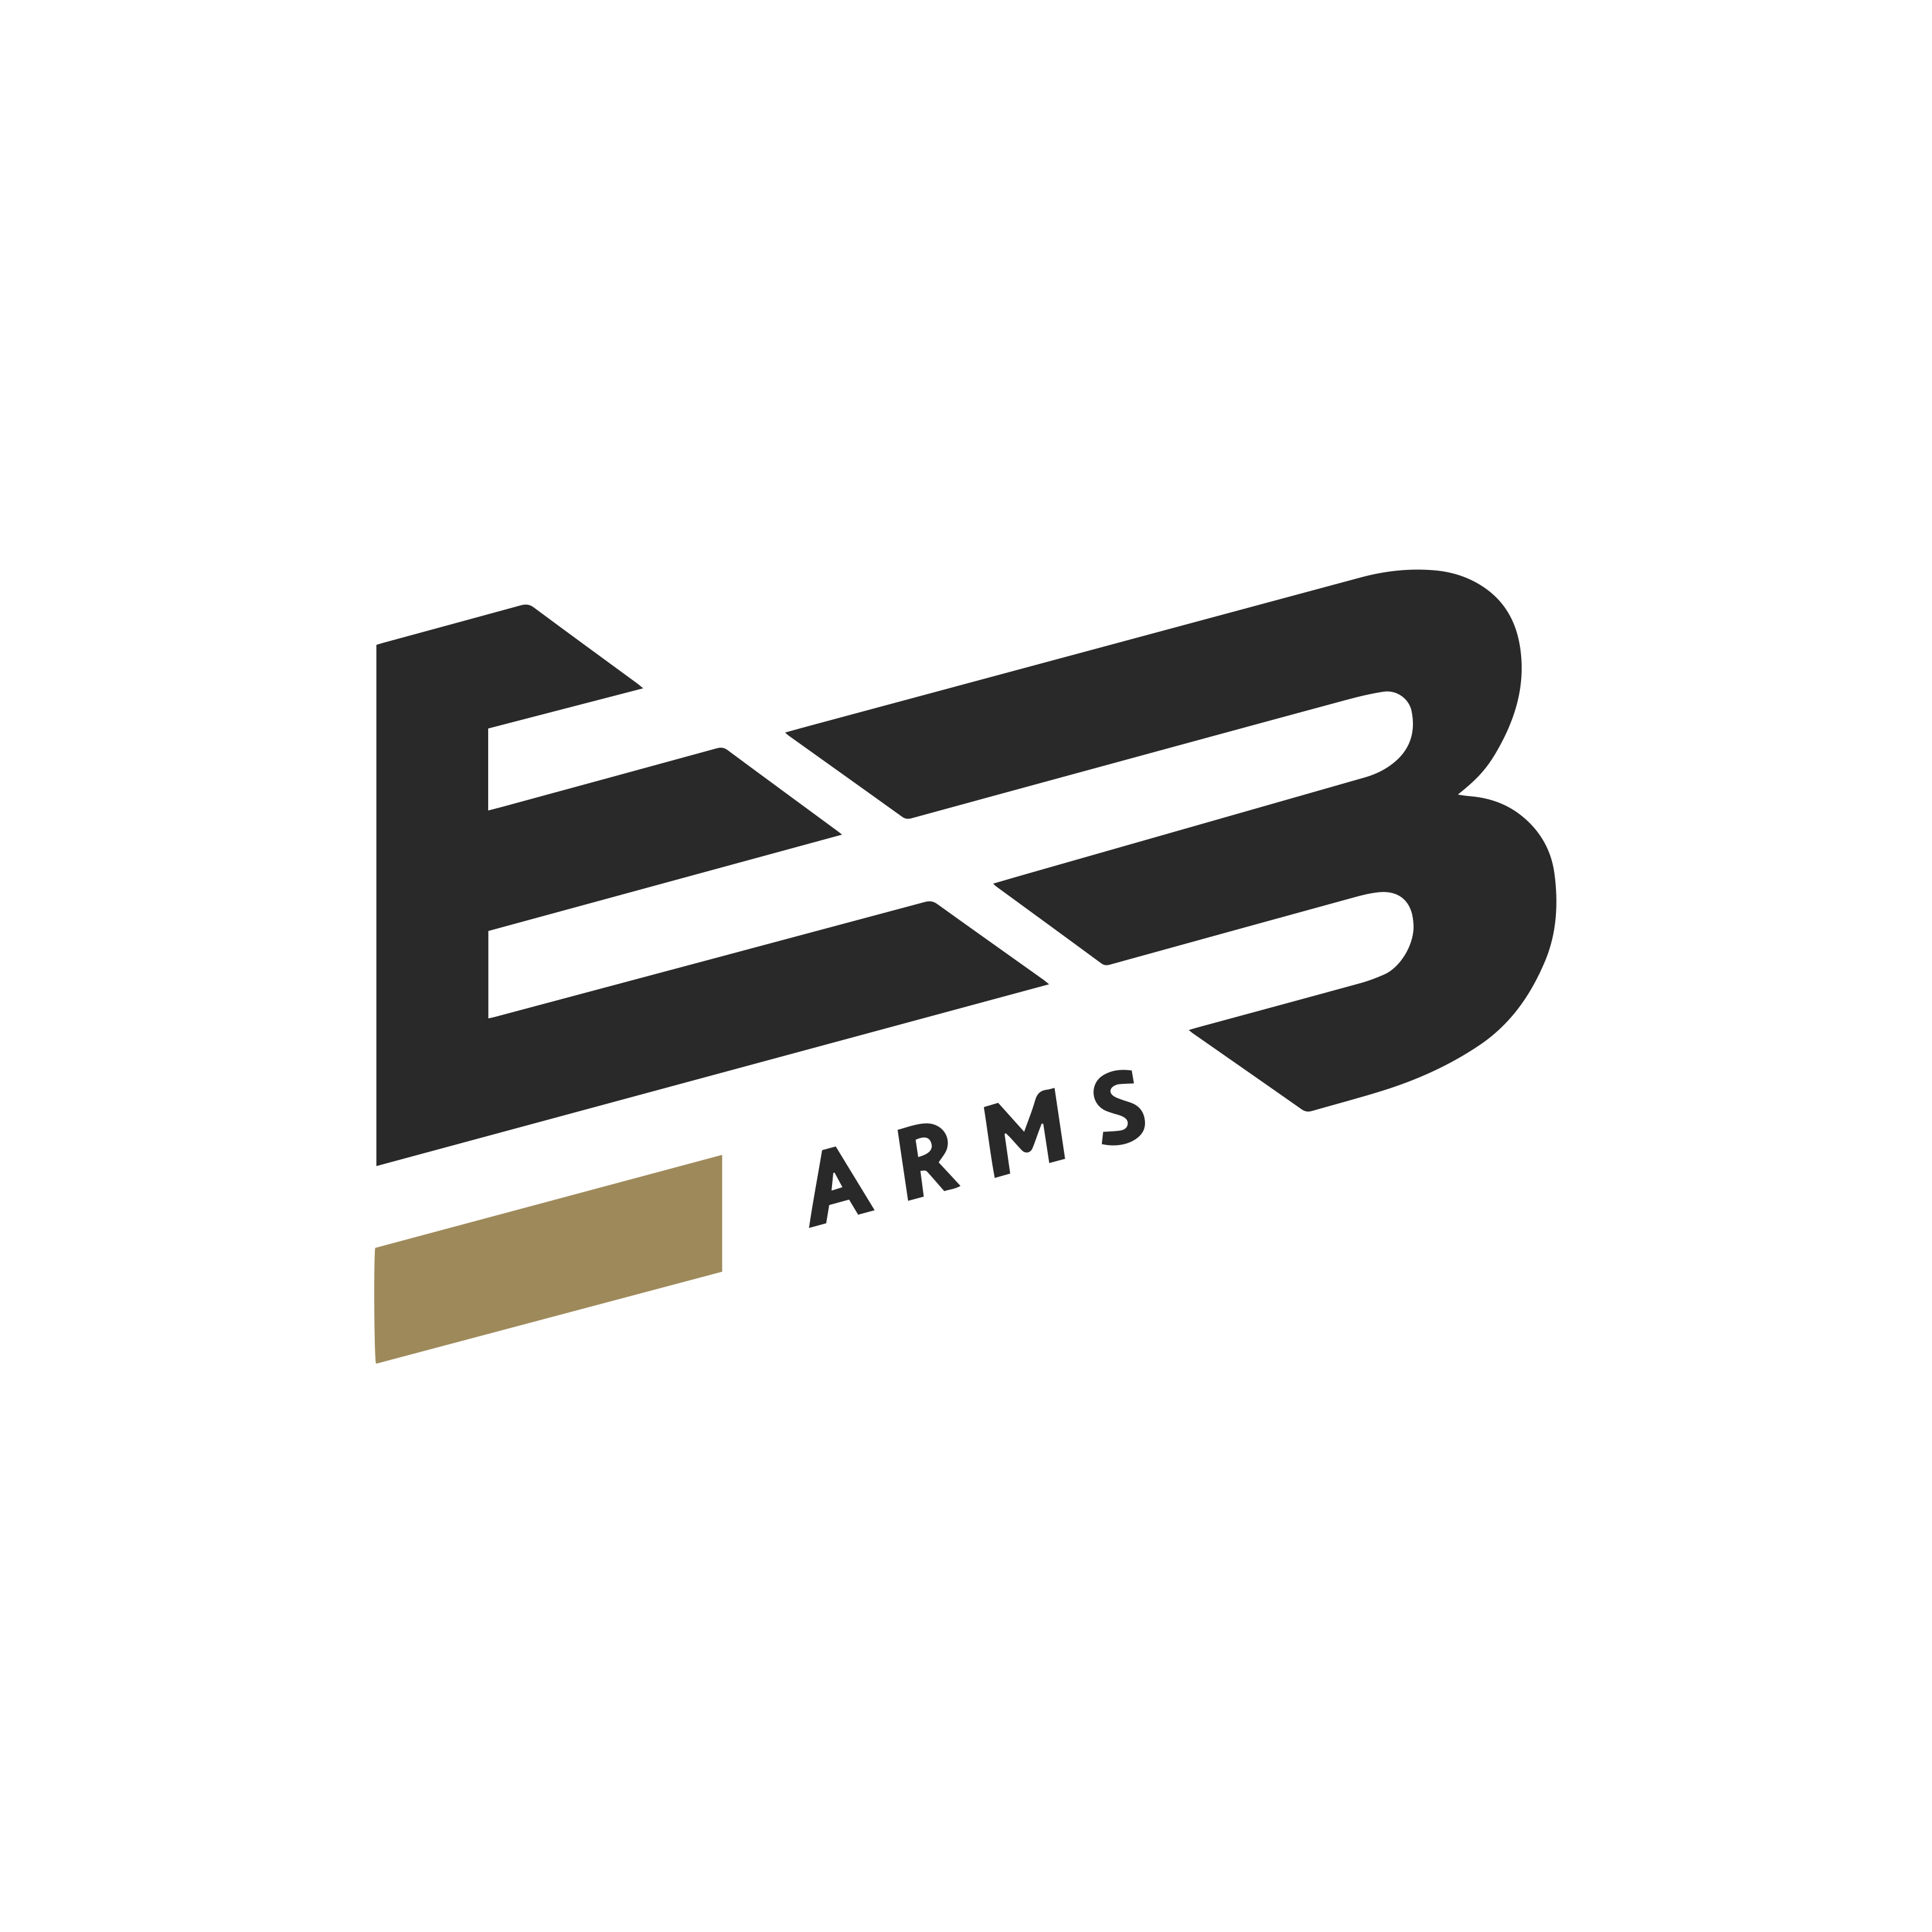 EB Arms (1)